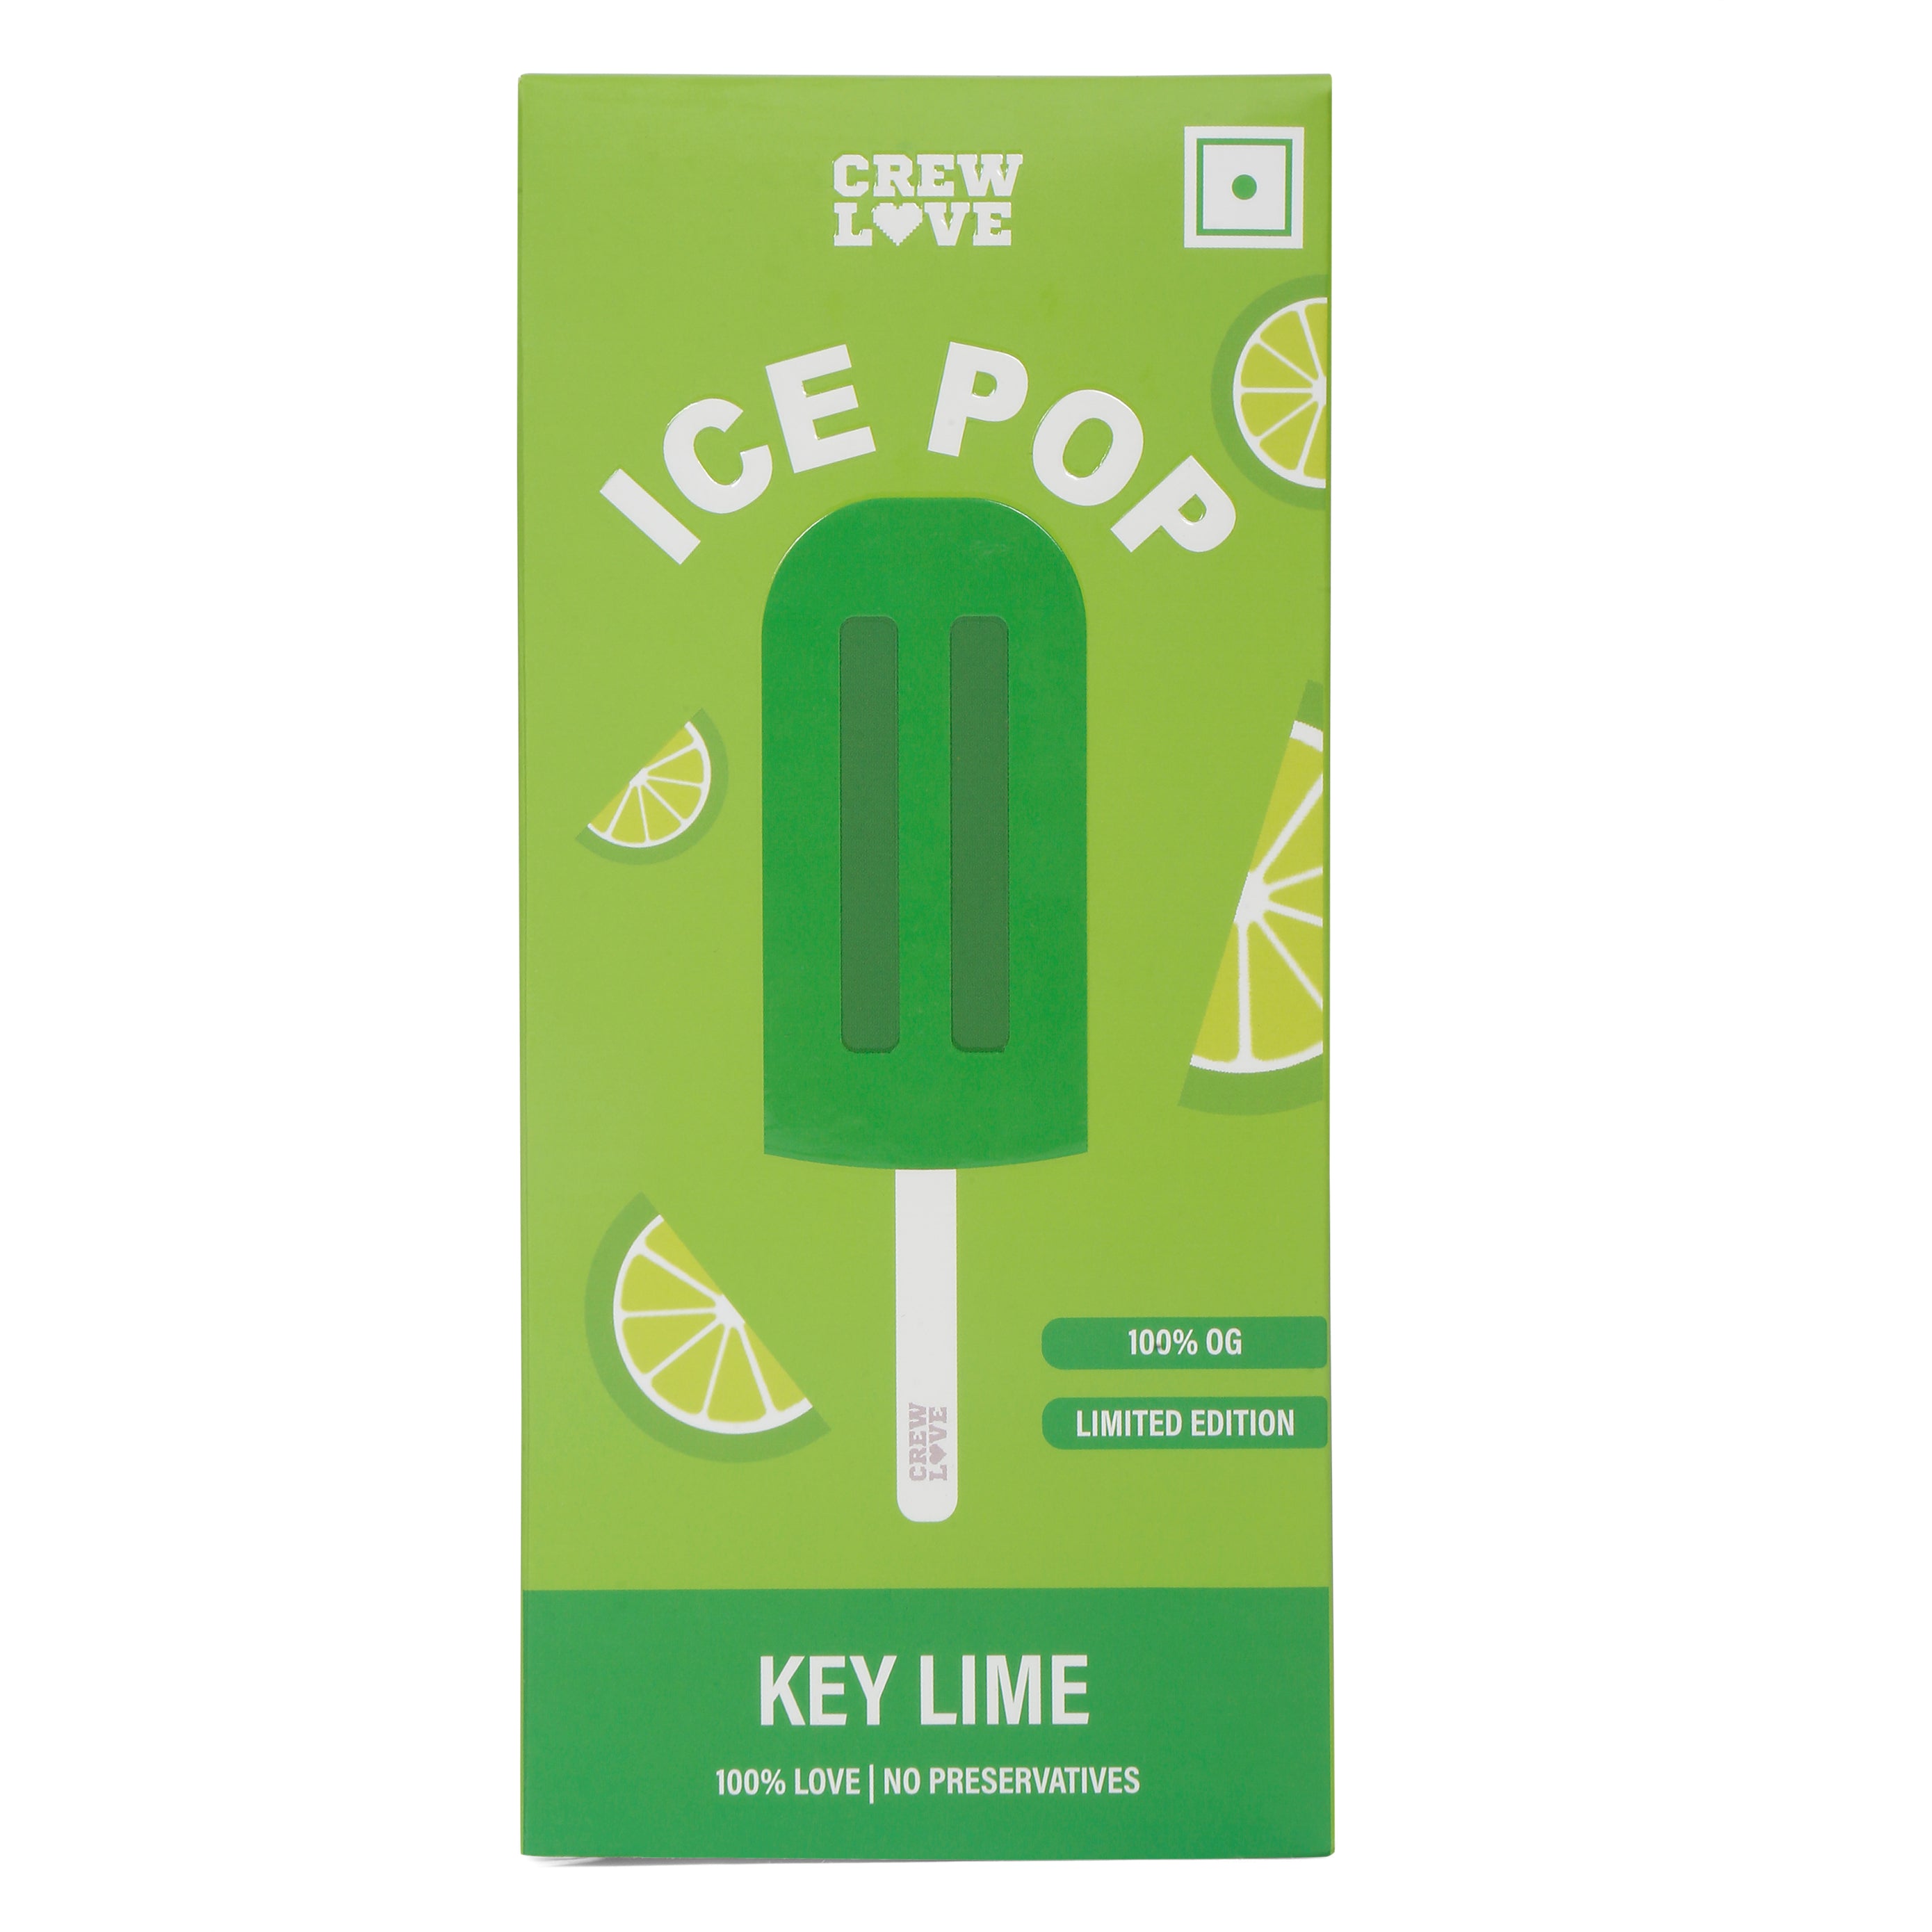 CDC ICE POP SOCKS - KEY LIME